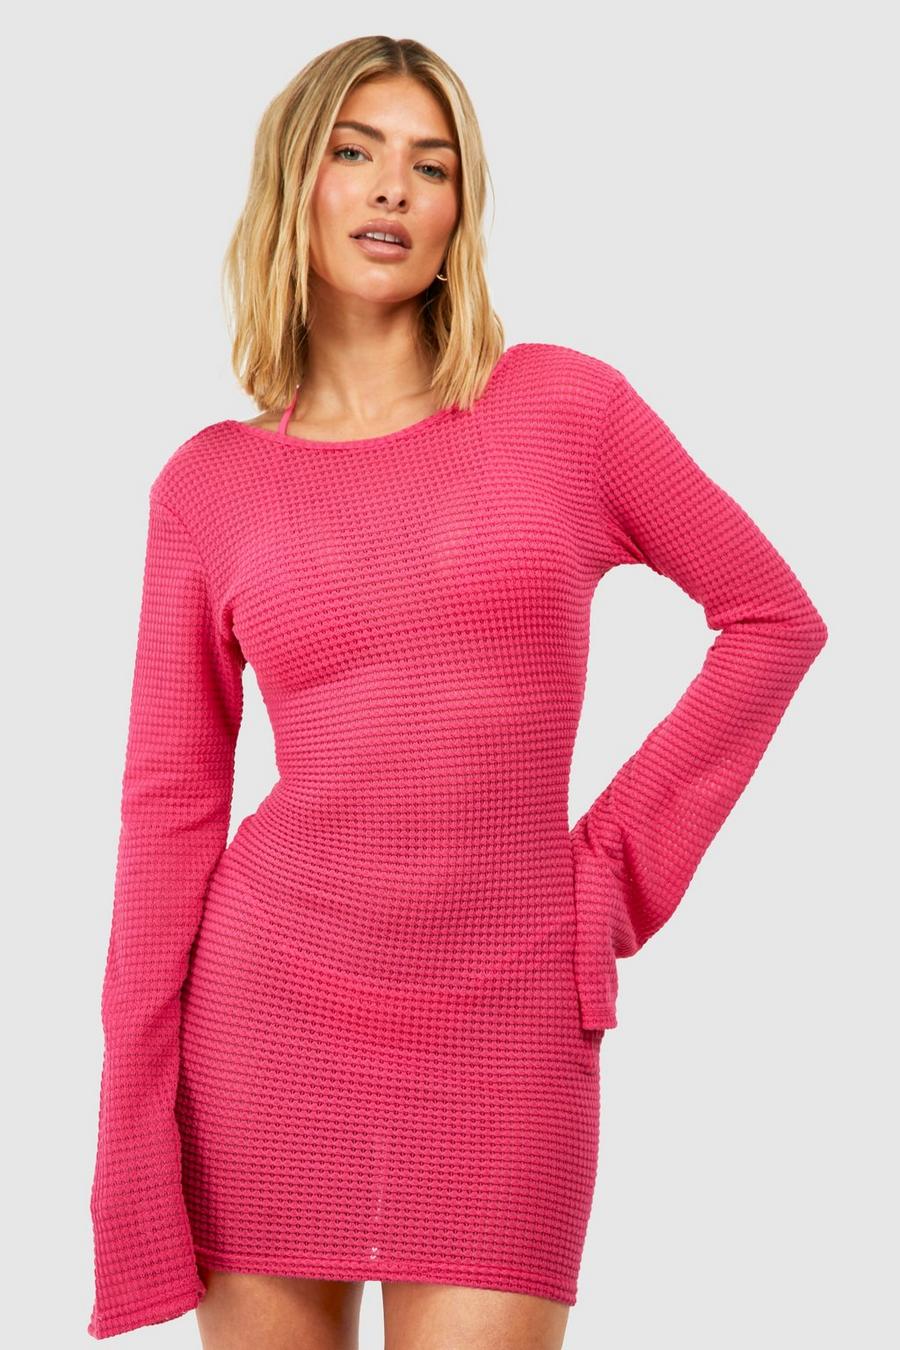 Rückenfreies gestricktes Strand-Minikleid, Hot pink